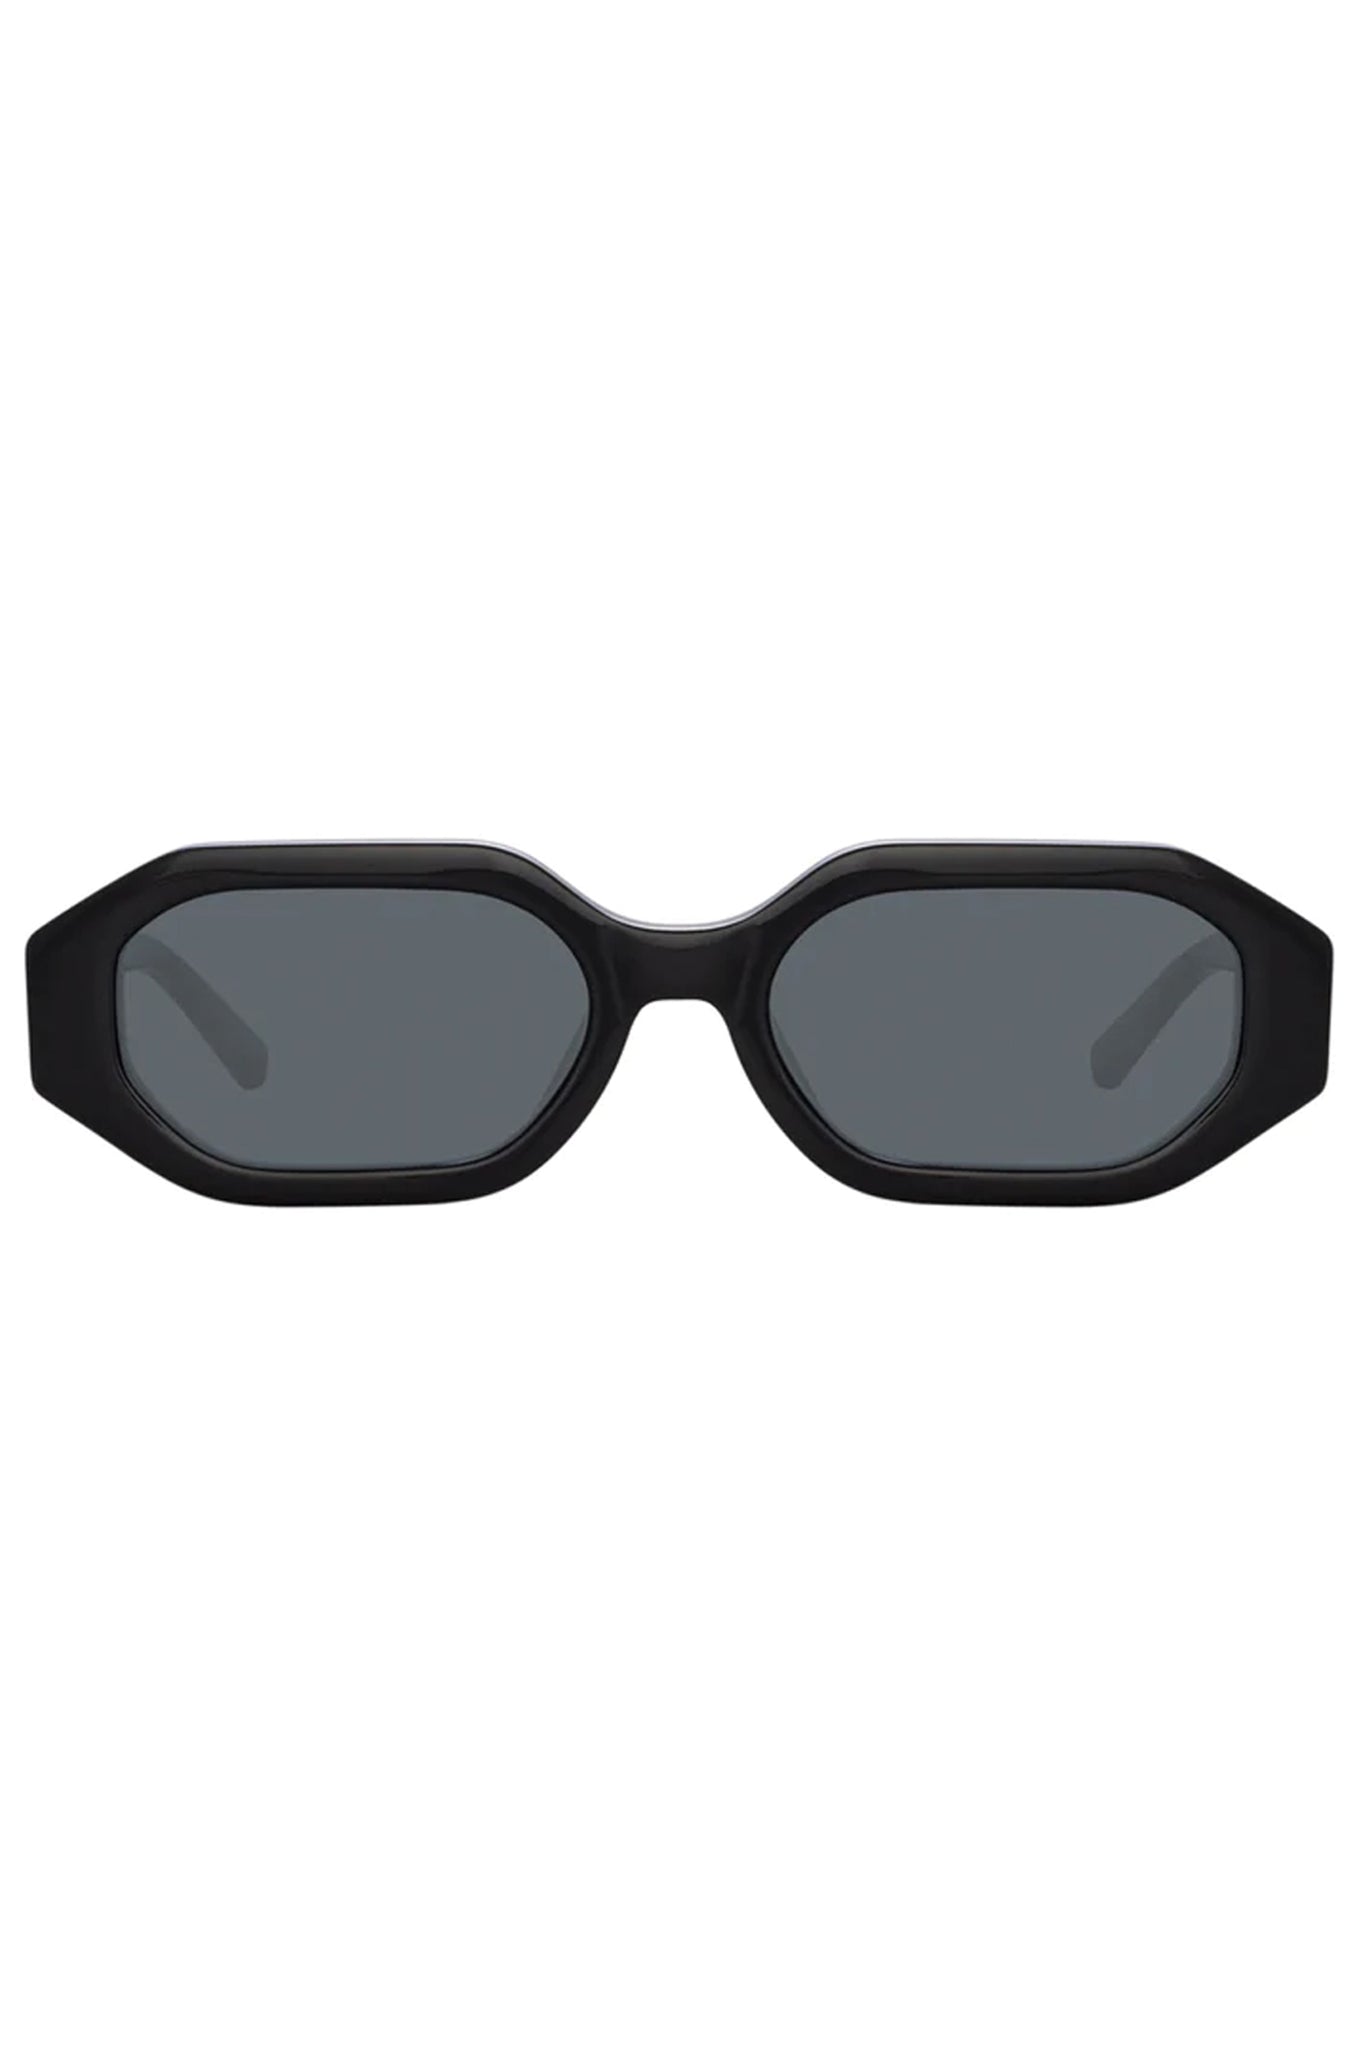 LINDA FARROW The Attico Irene Angular Sunglasses in Black